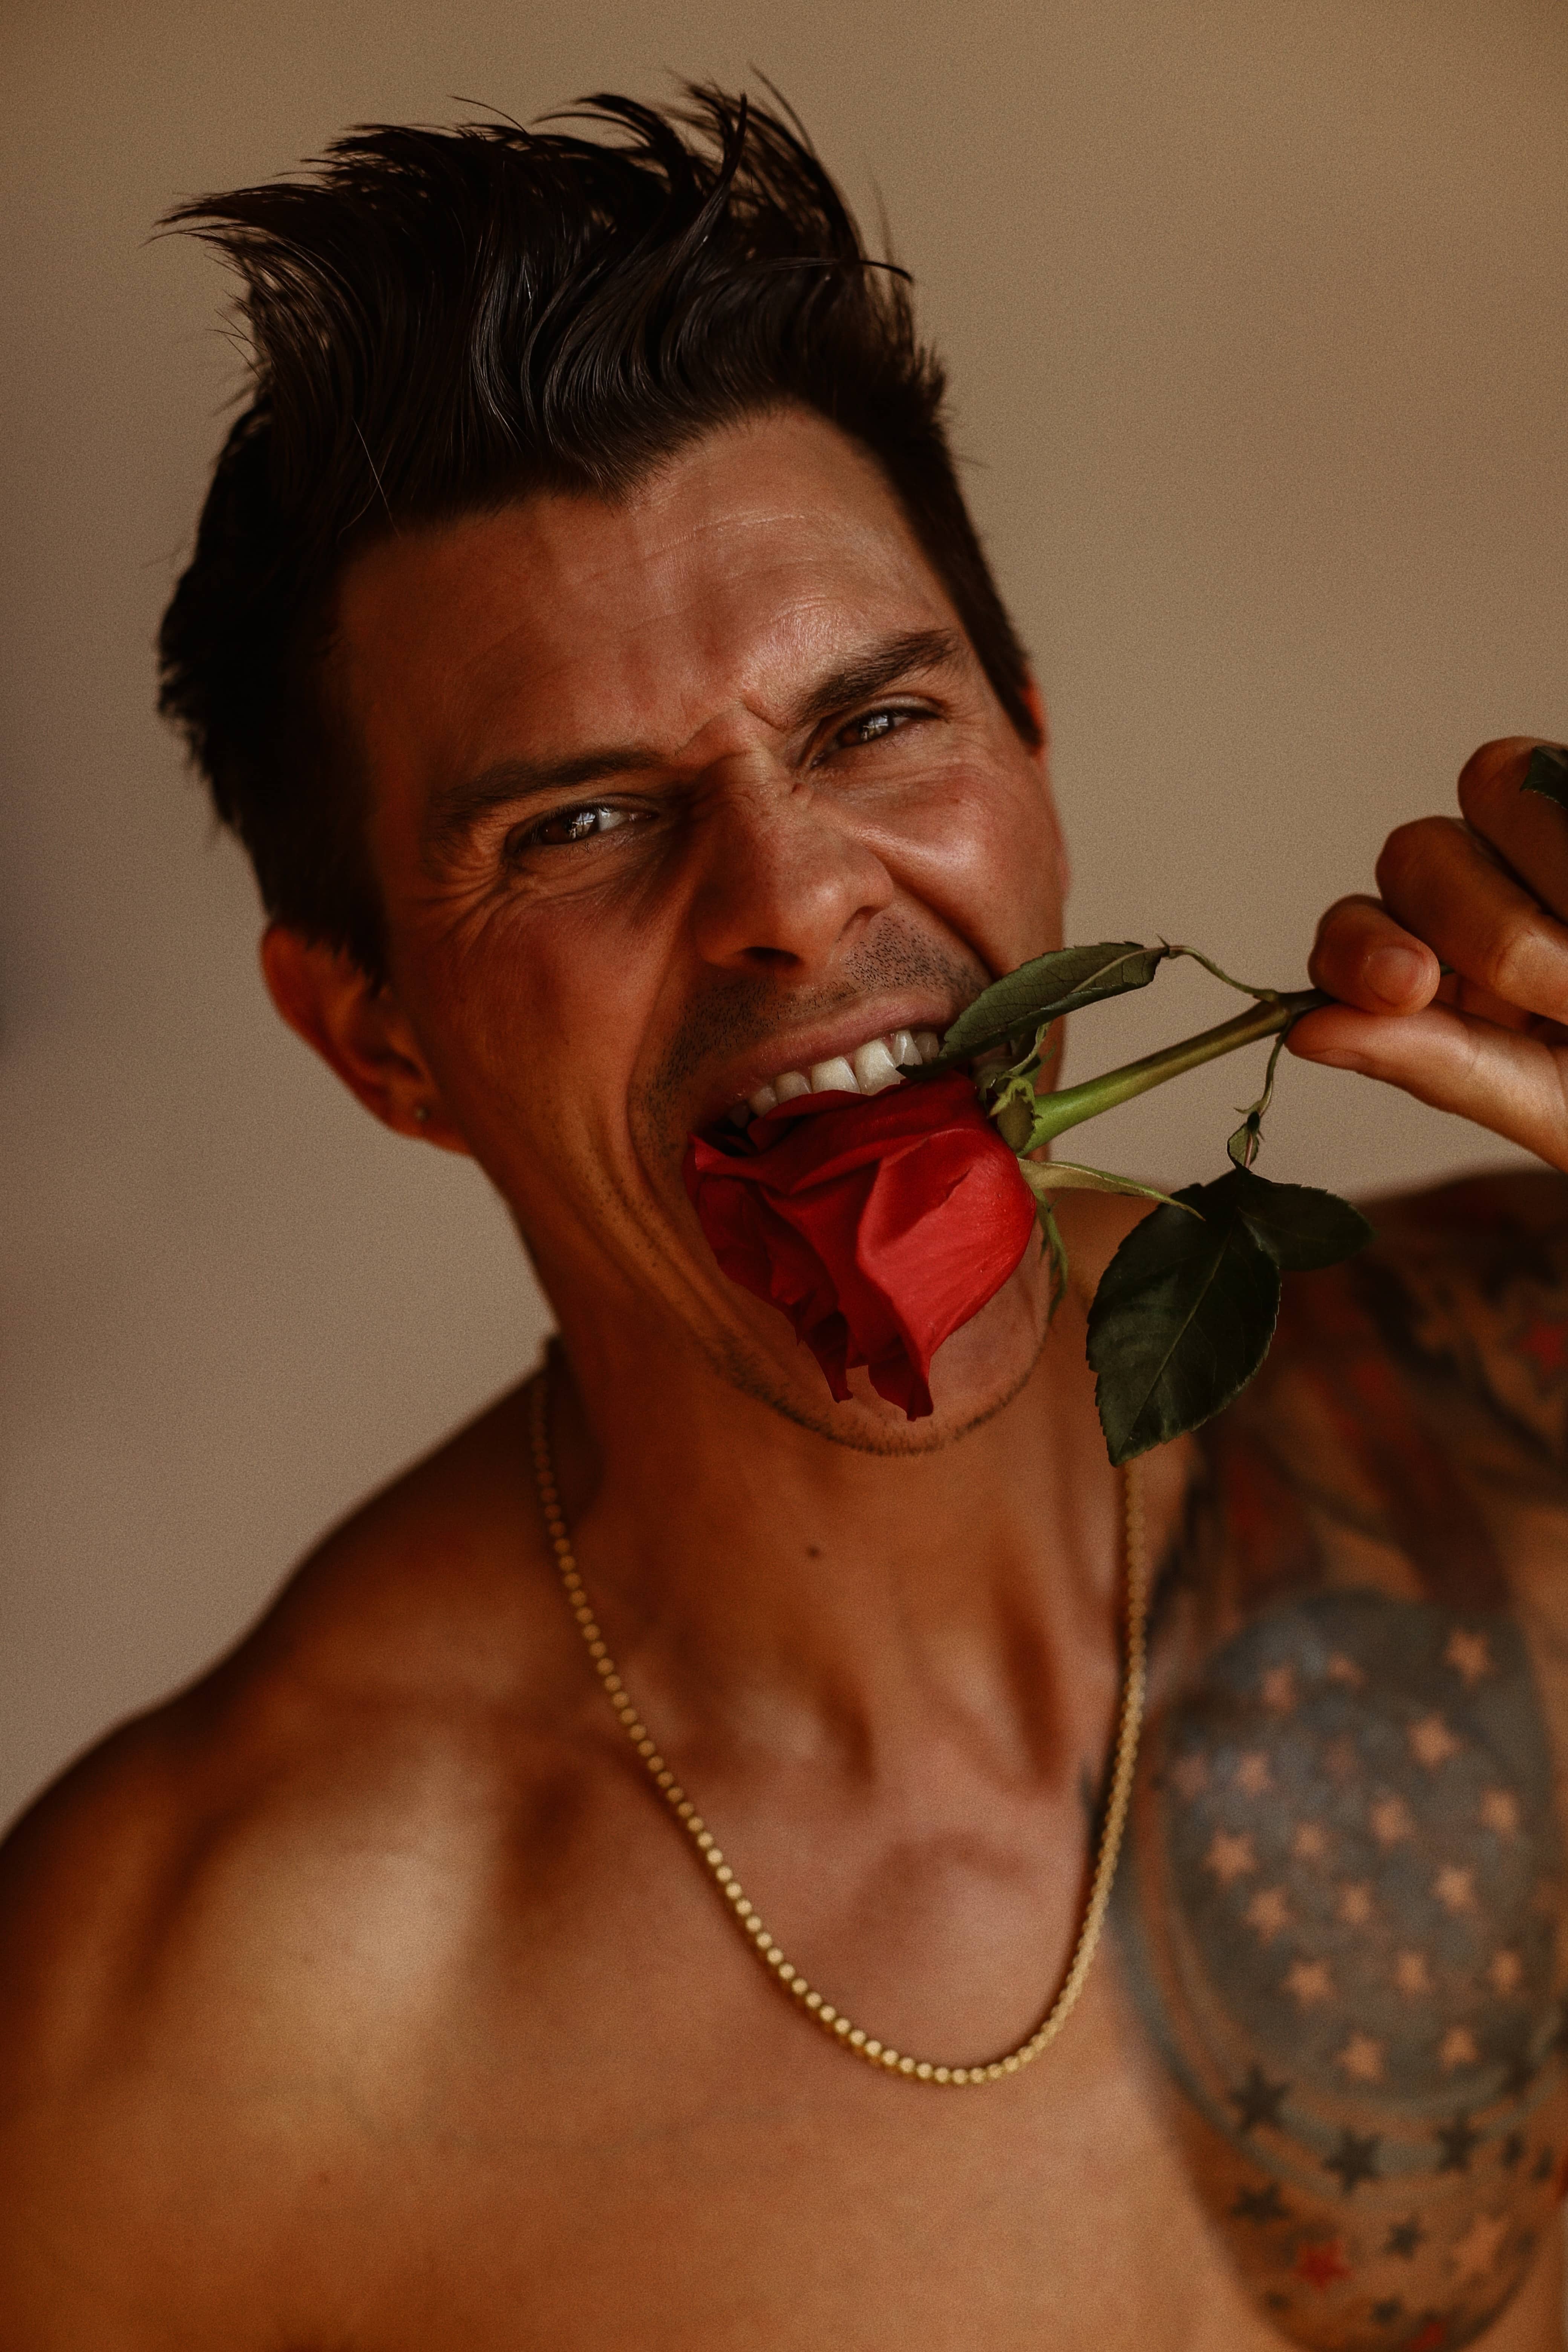 Kenny Braasch biting a red rose